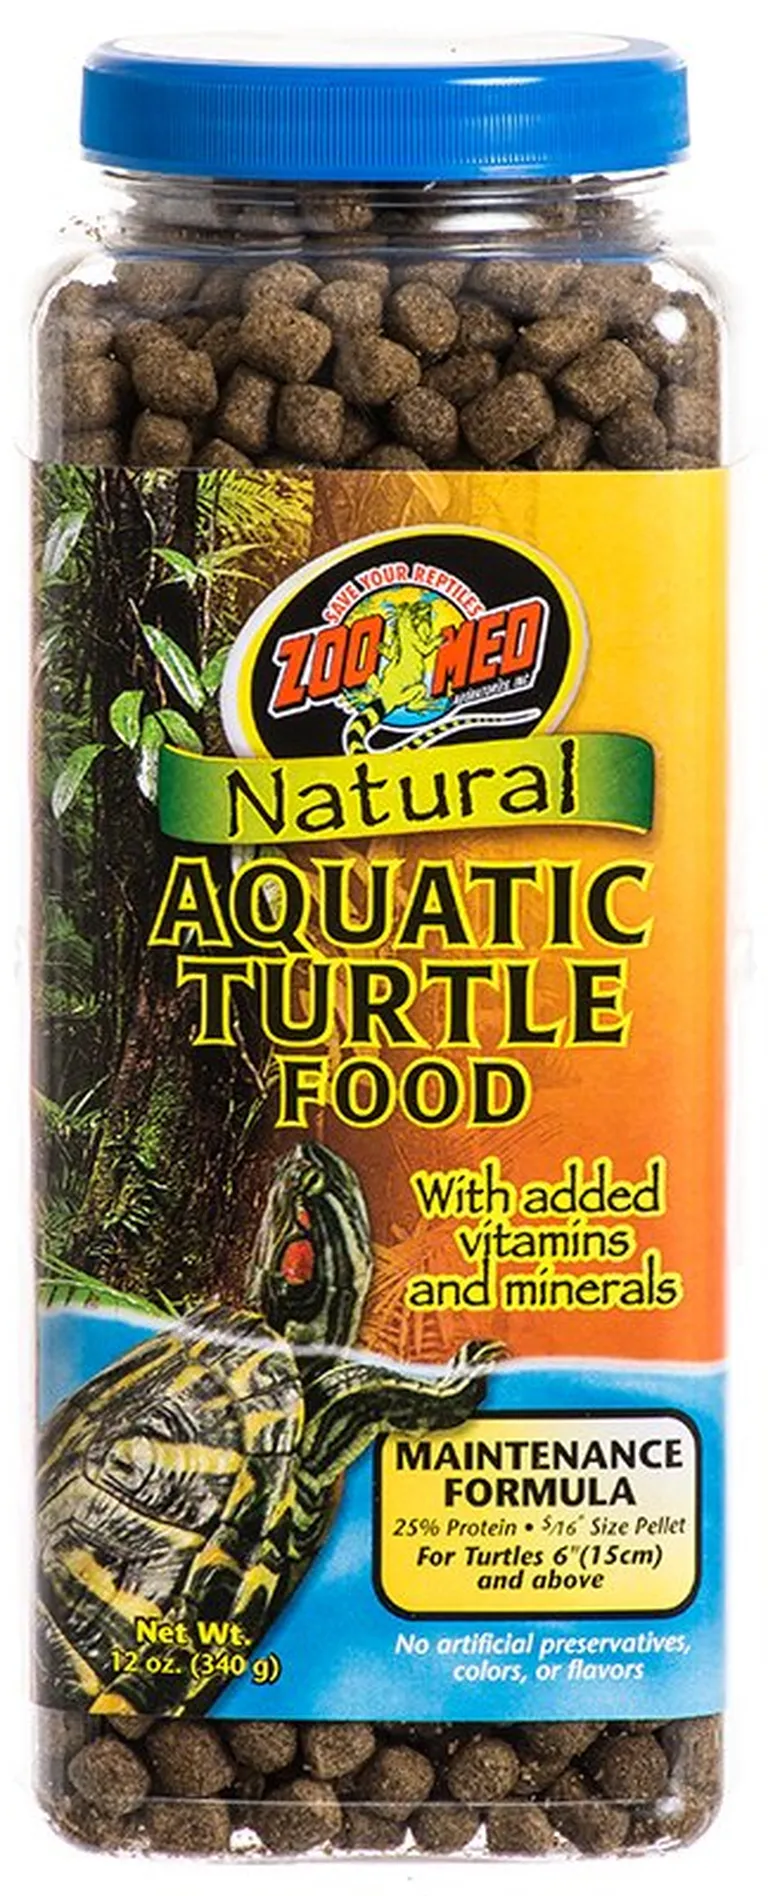 Zoo Med Natural Aquatic Turtle Food Maintenance Formula Photo 2